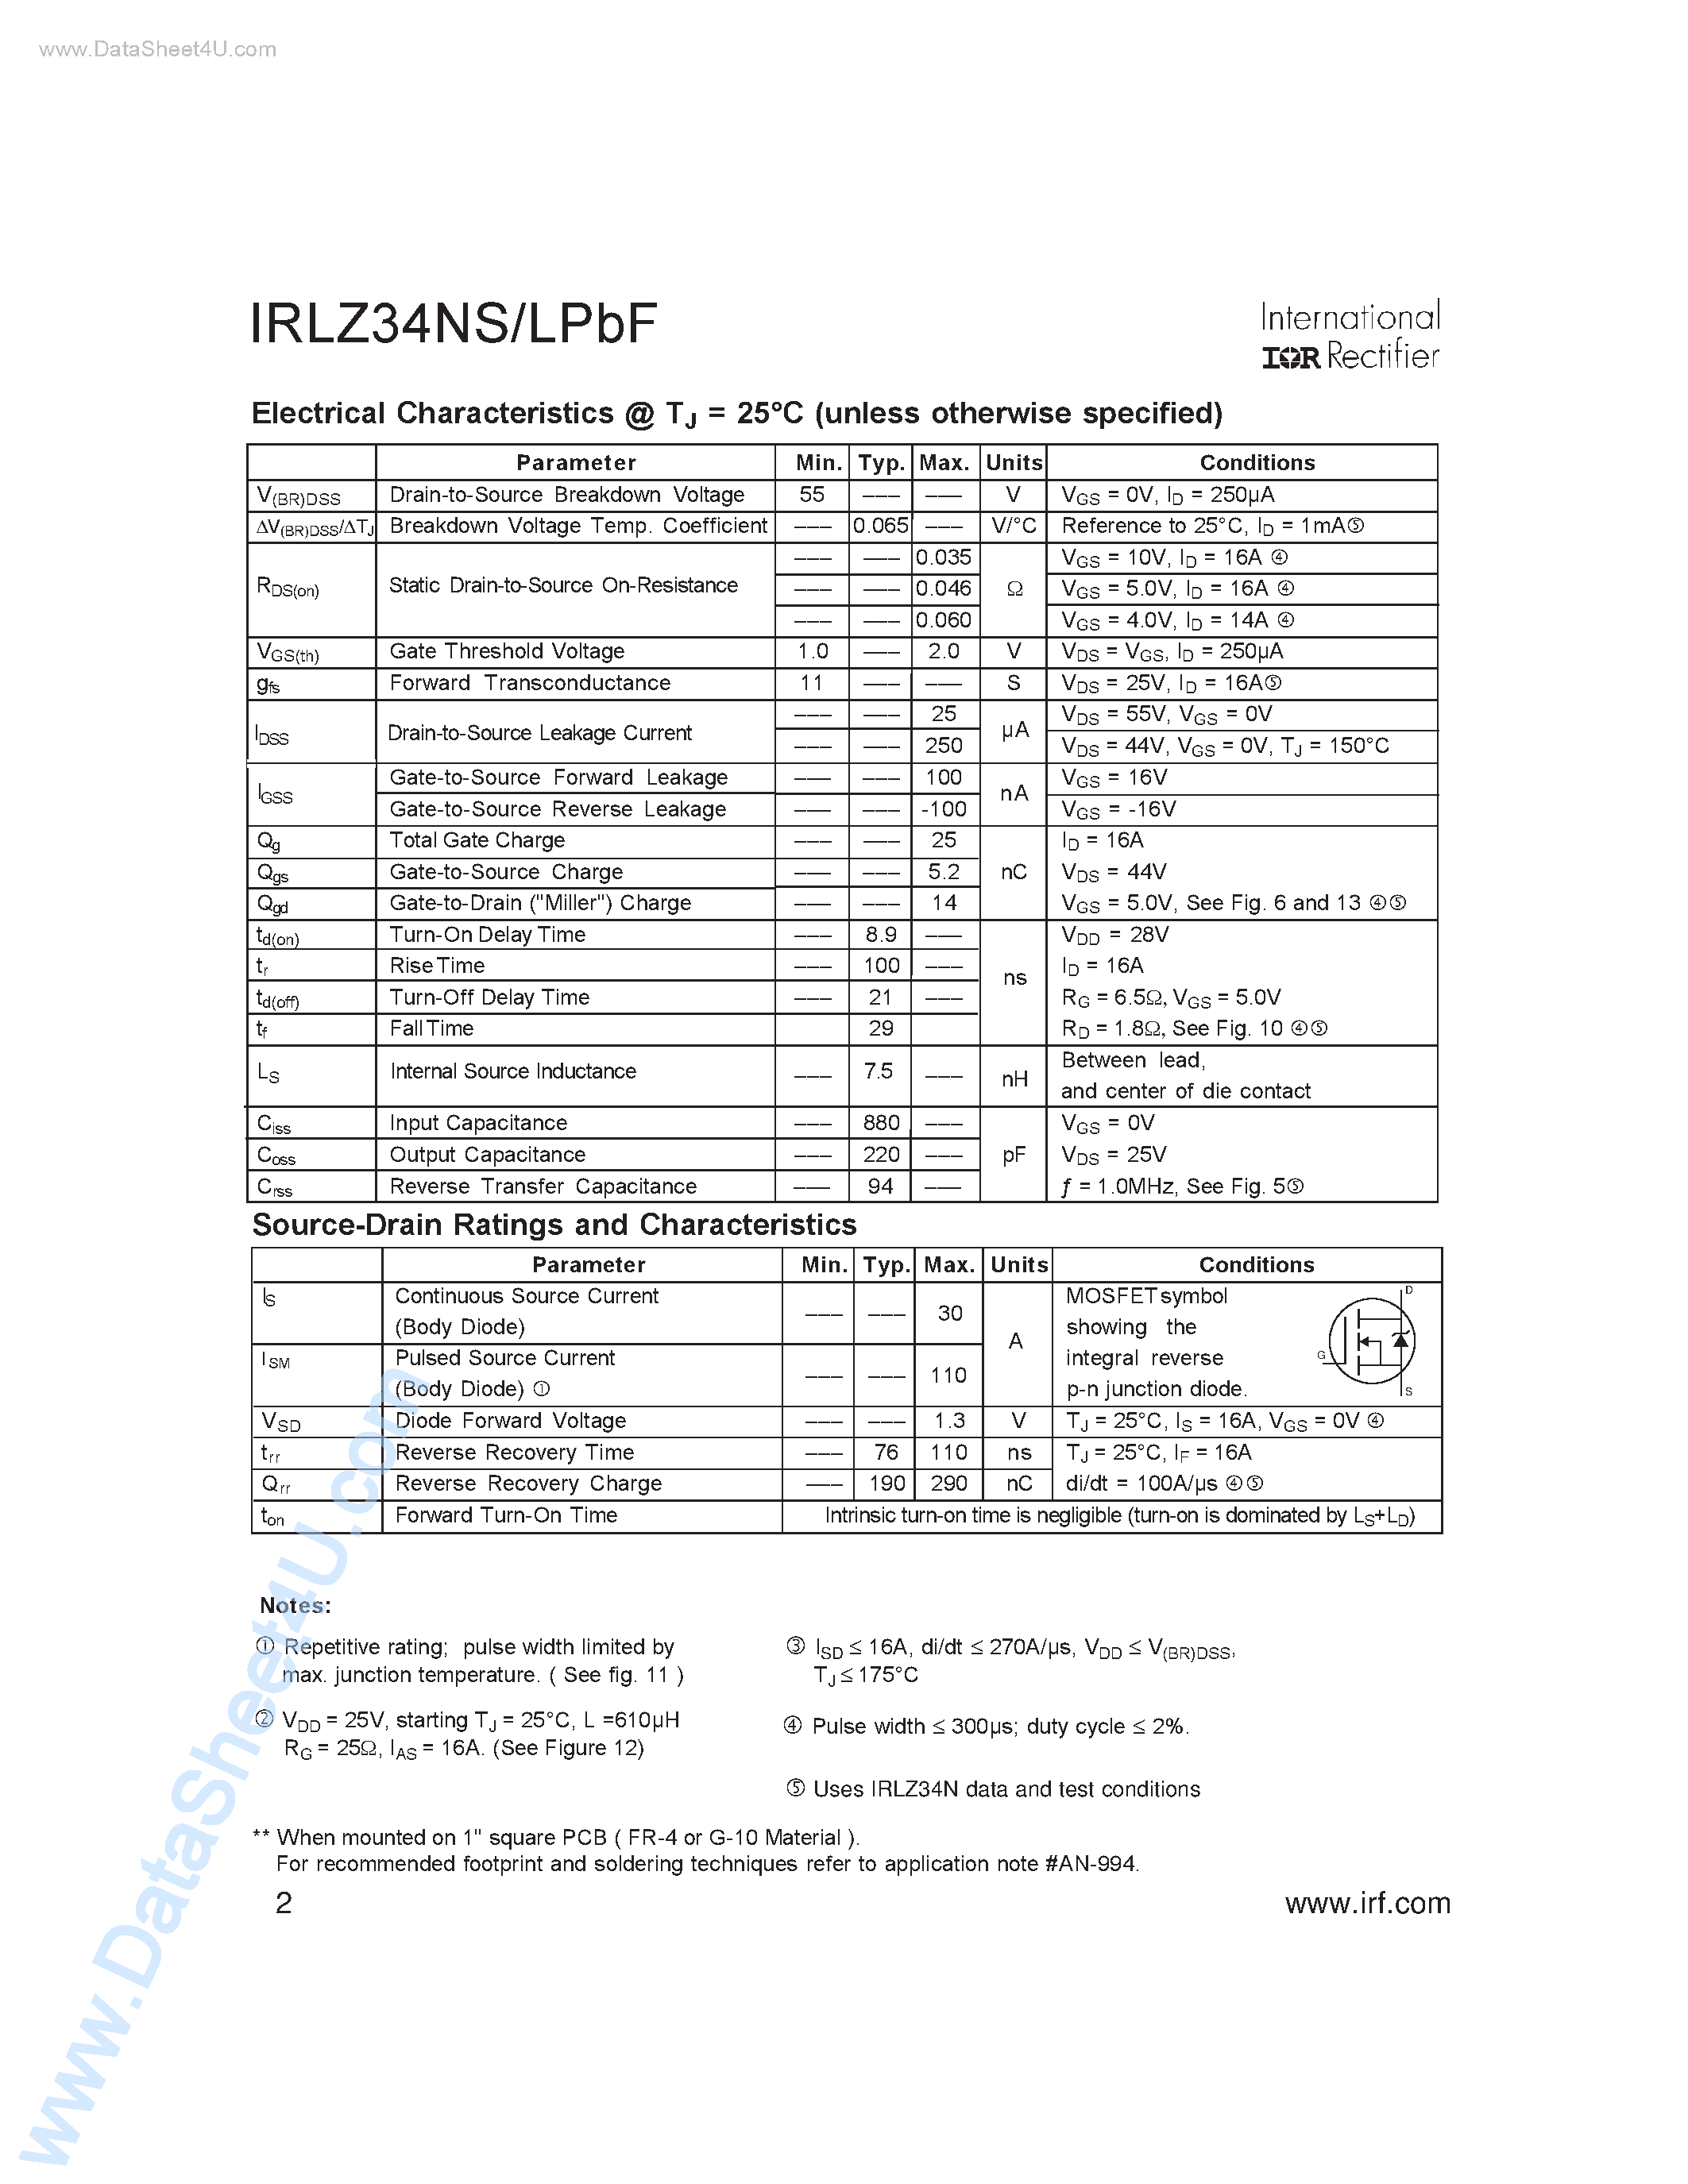 Даташит IRLZ34NLPBF - (IRLZ34NSPBF / IRLZ34NLPBF) Power MOSFET страница 2